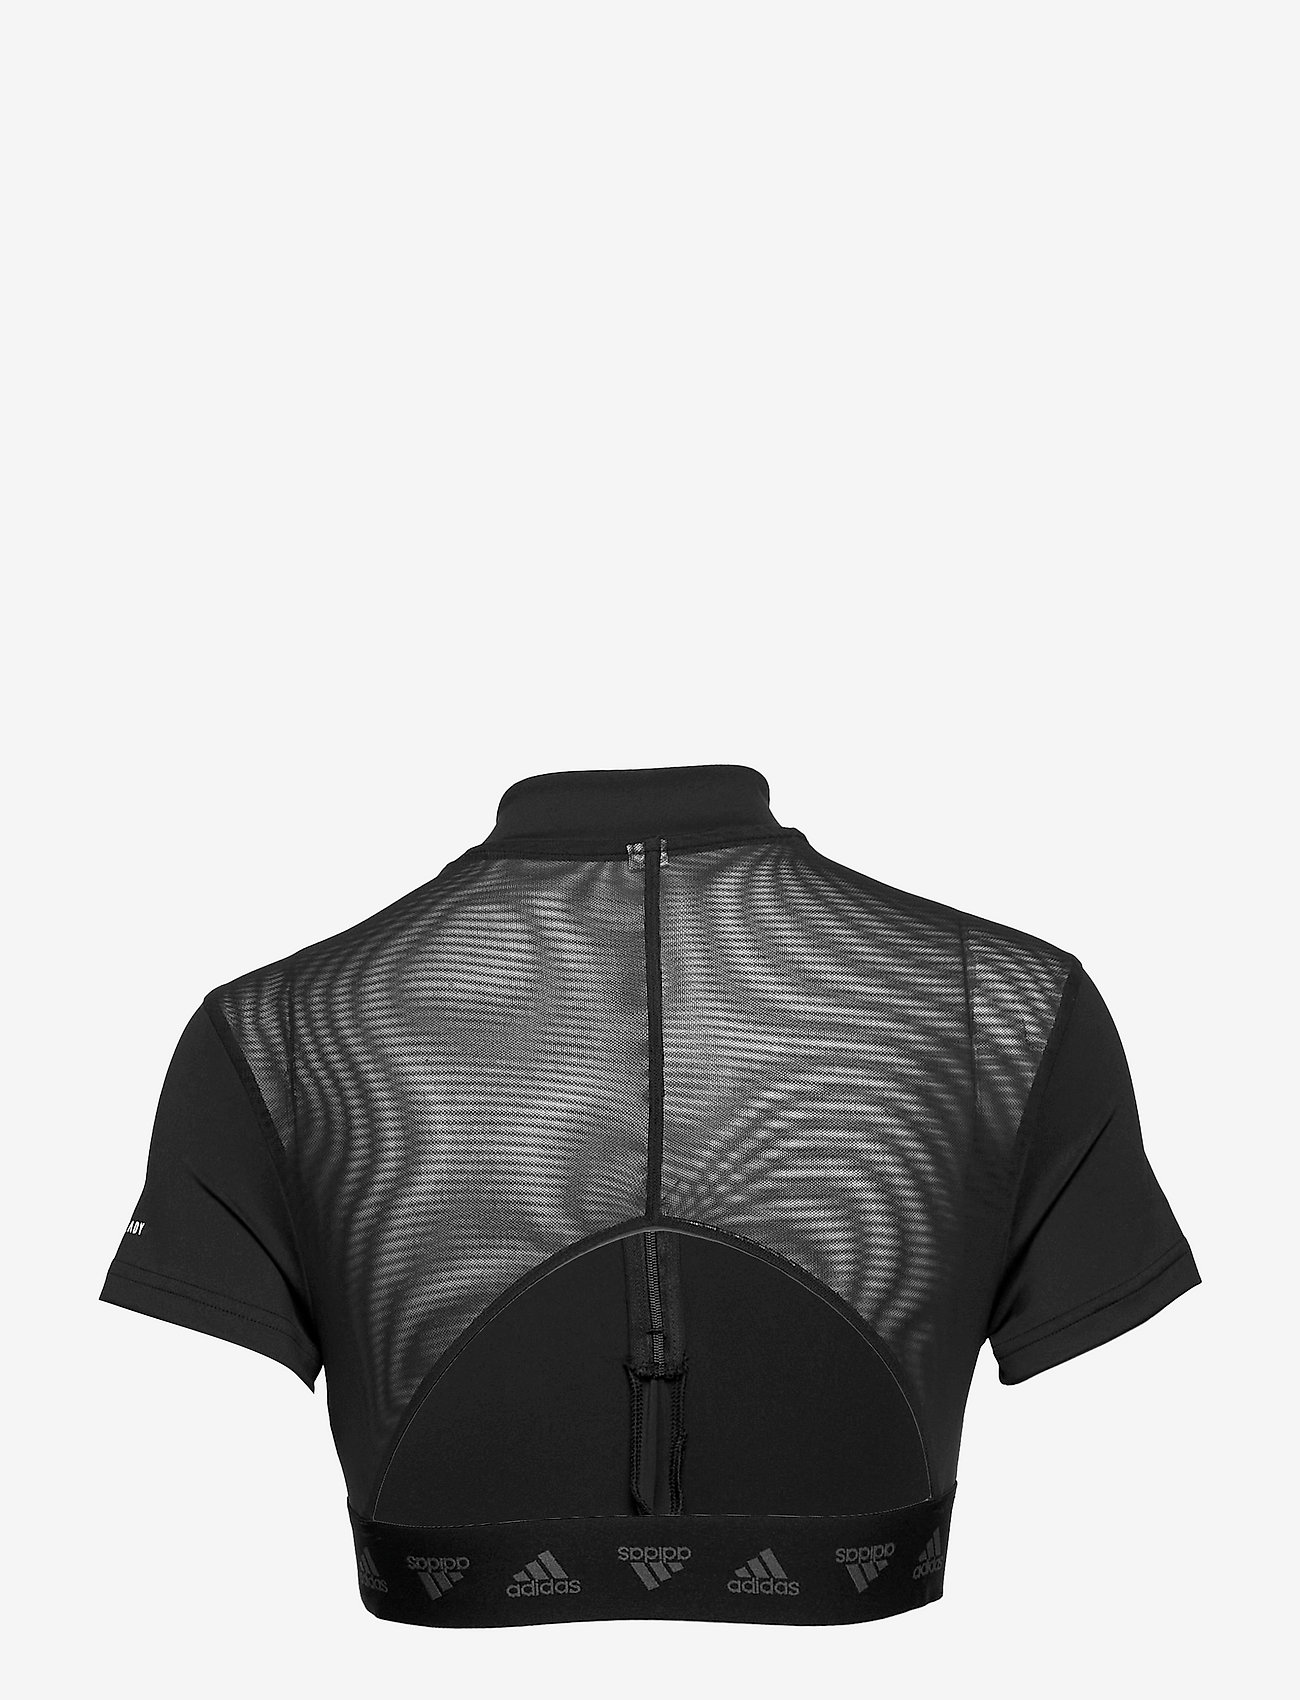 adidas Performance - Hyperglam Crop Zip Tee W - navel shirts - black - 1